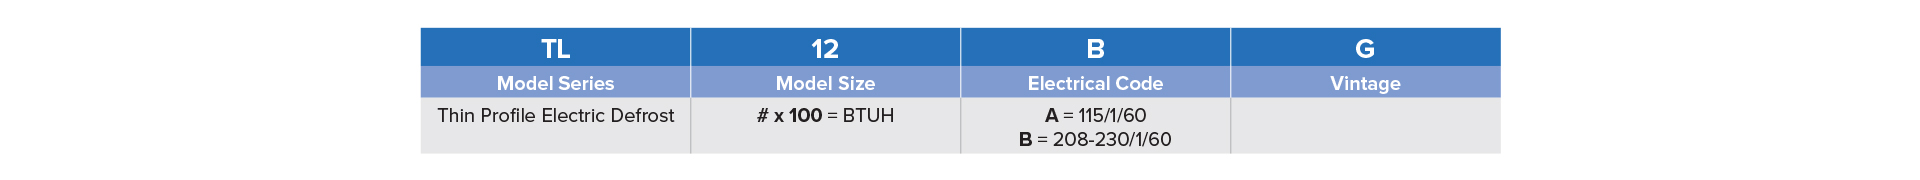 Thin Profile Electric Defrost Nomenclature